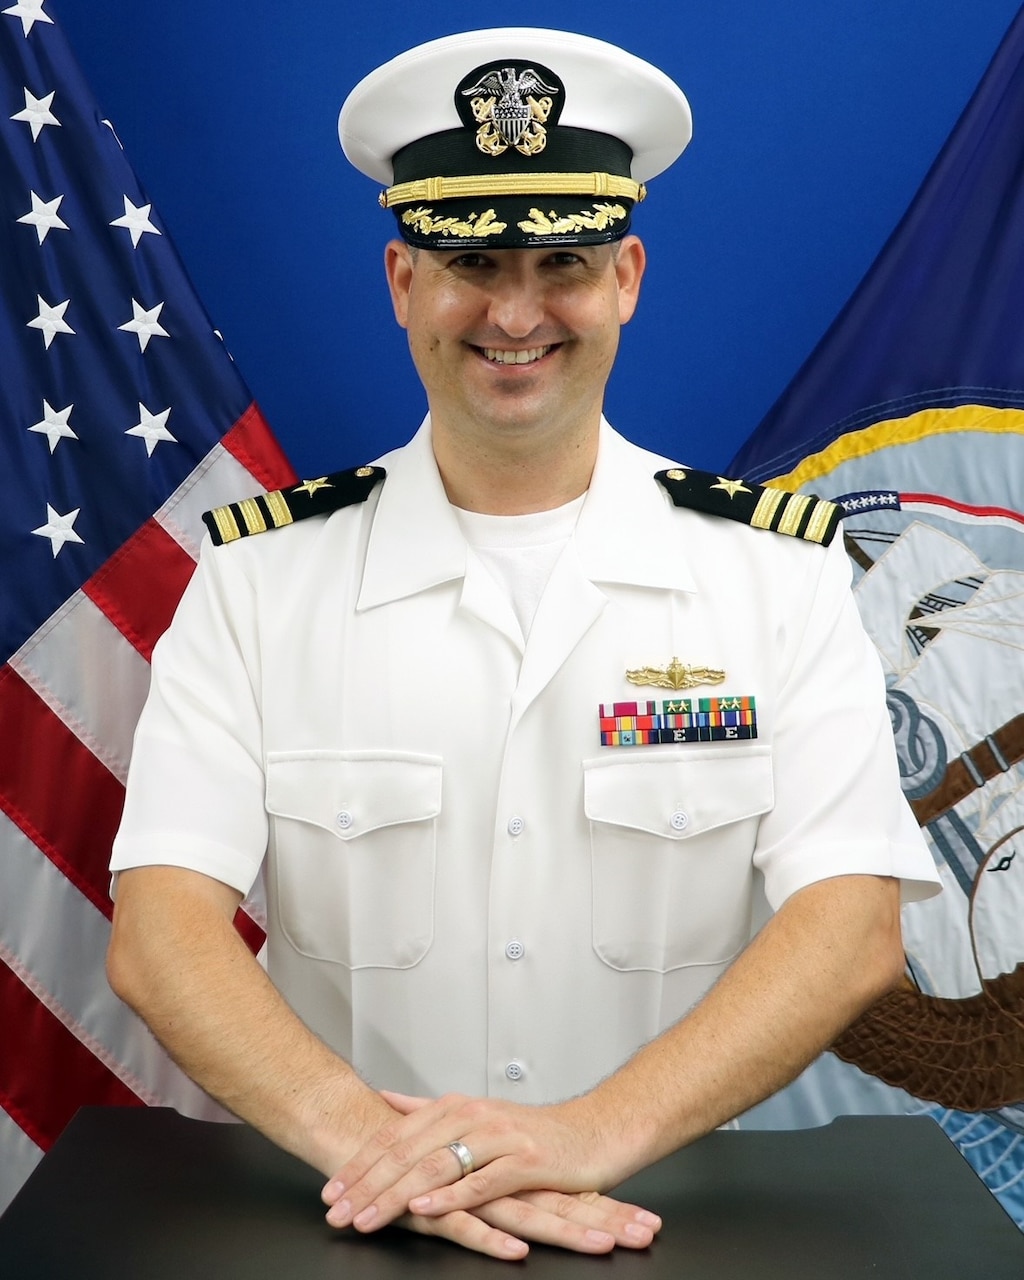 Commander Ronald C. Fairbanks